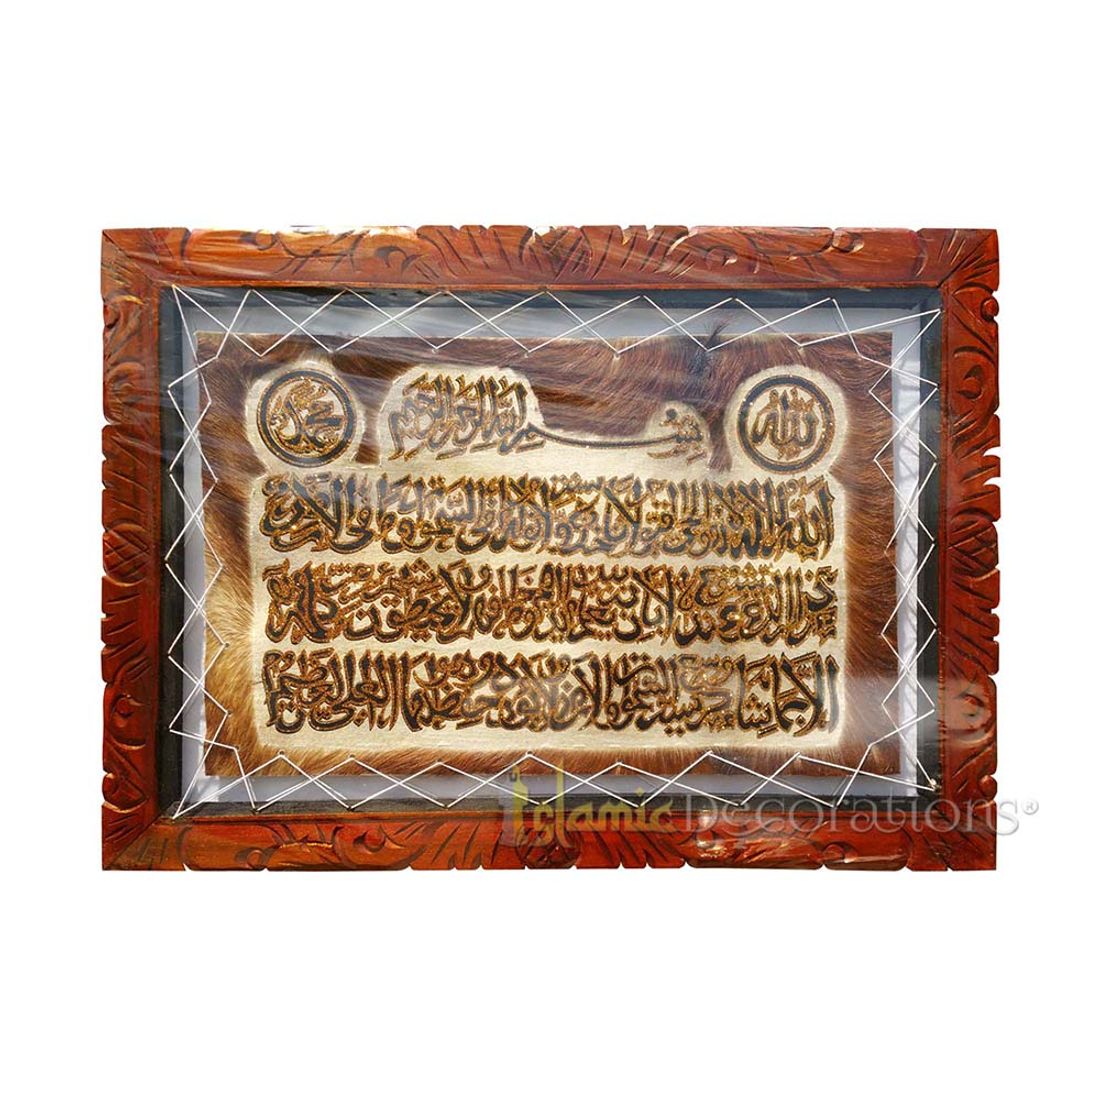 X-Segiempat Mendatar Besar Ayatul-kursi Kambing Sorok Kaligrafi 19.5 x 27.5 inci